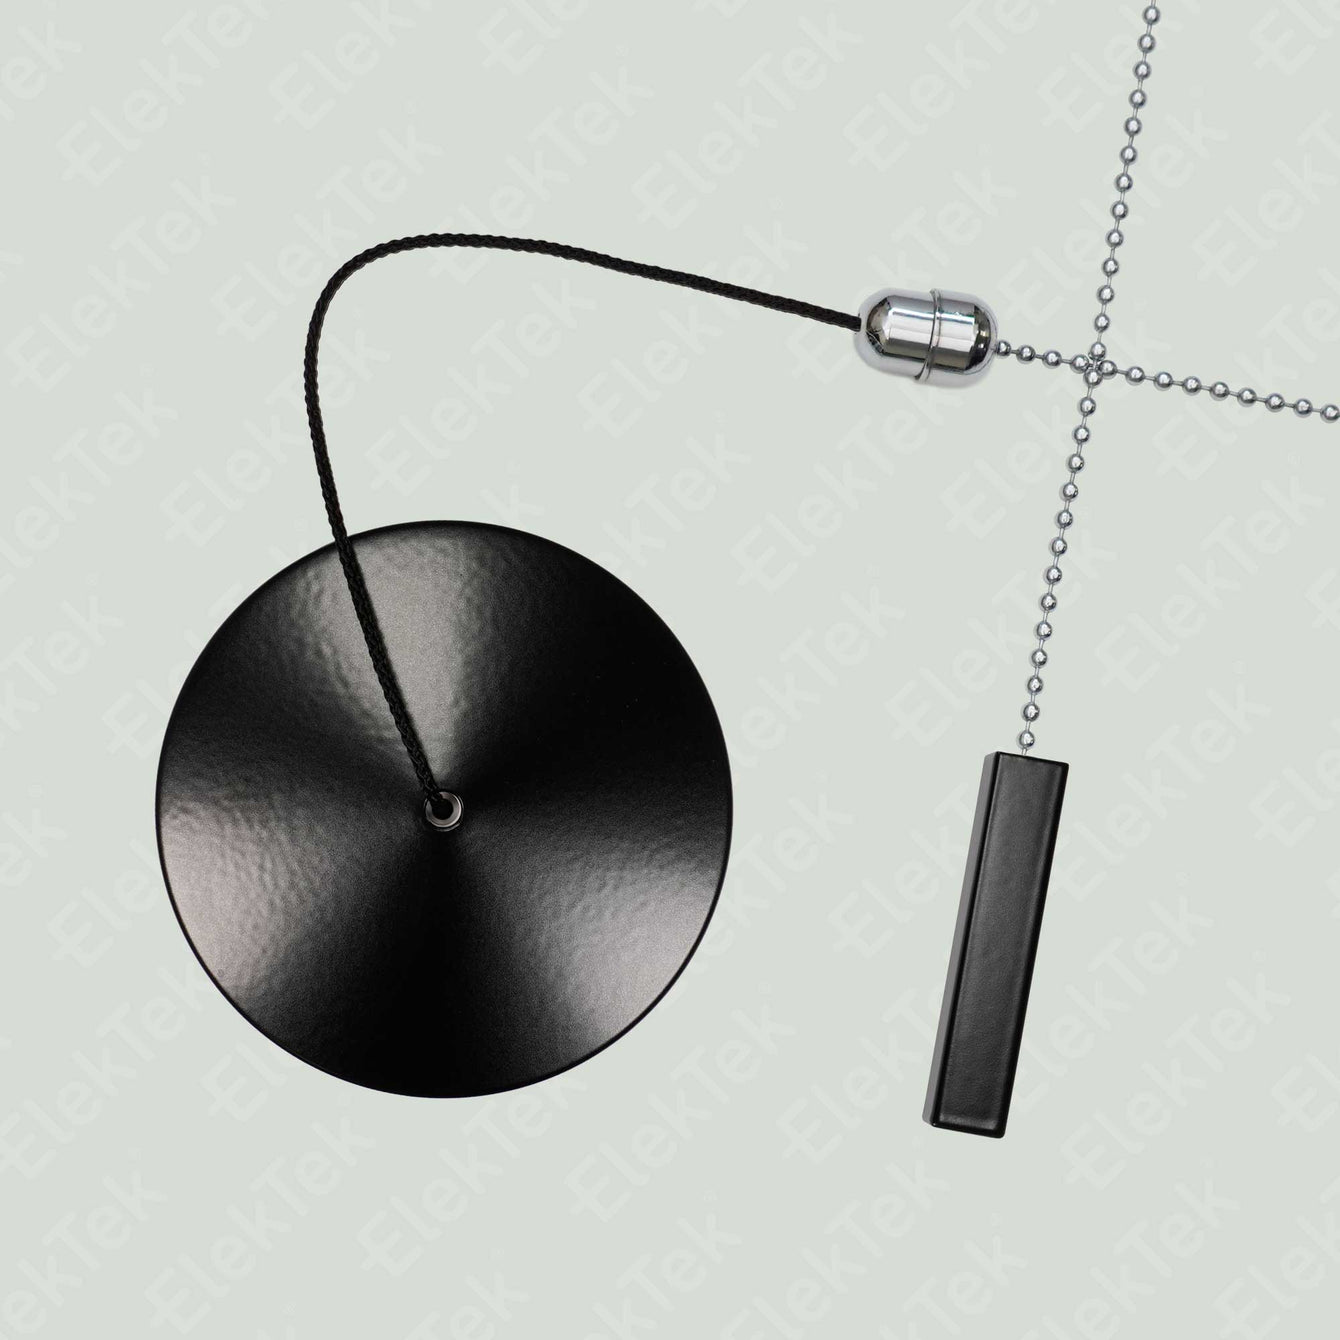 ElekTek Premium Black Bathroom Light Pull Cord Switch Kit with Pull Chain Handle Black Square Bar / Black